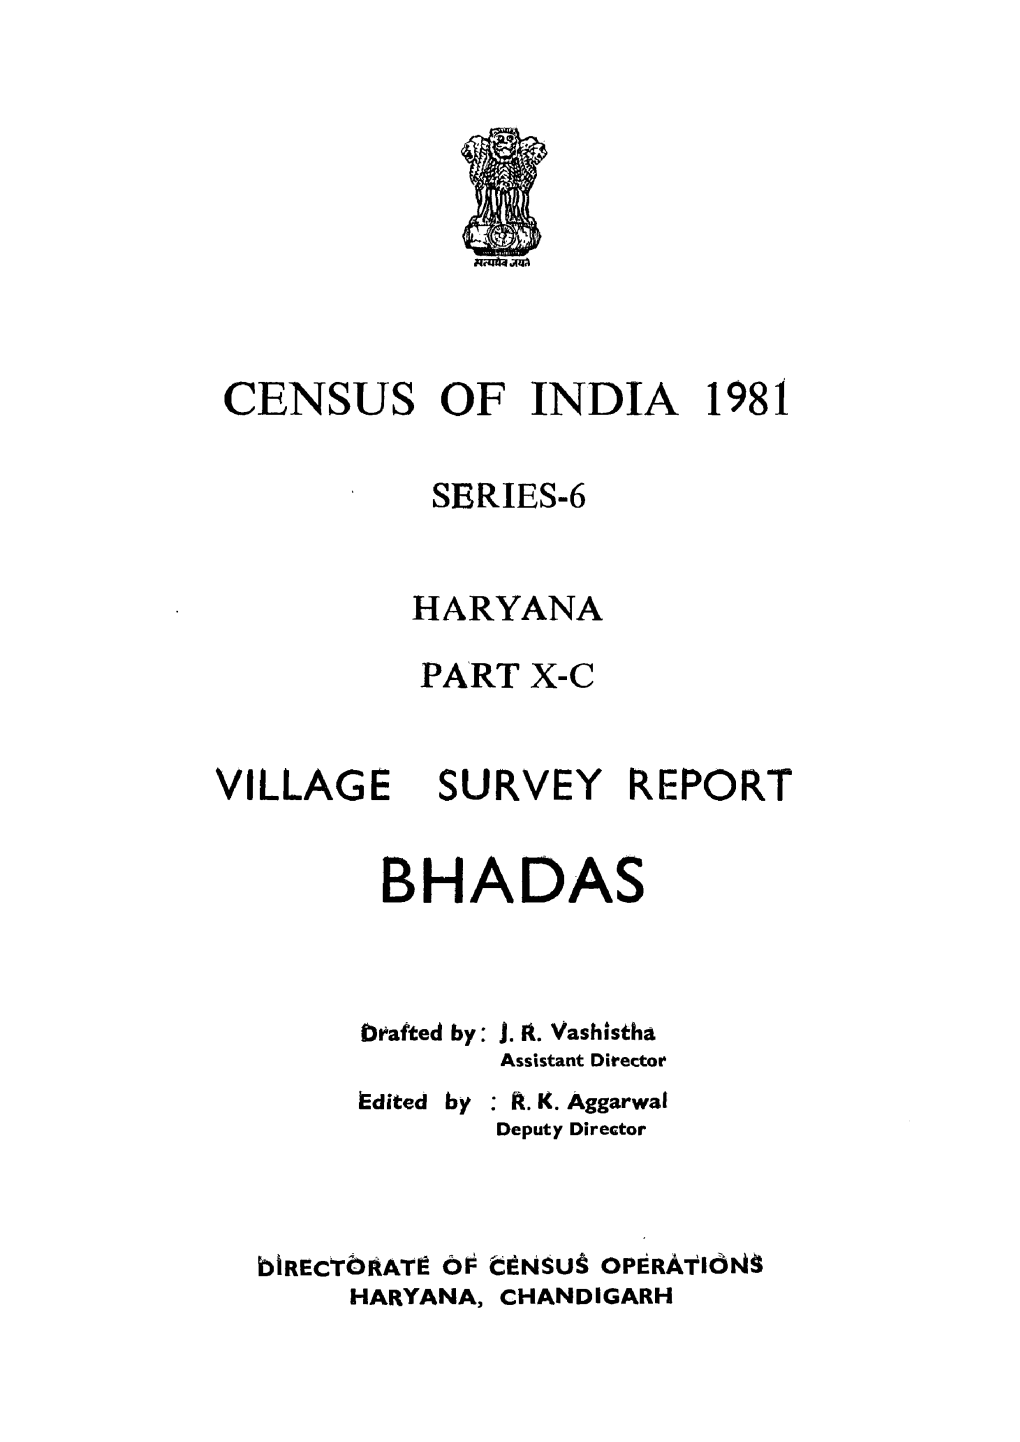 Village Survey Report, Bhadas, Part X-C, Series-6, Haryana